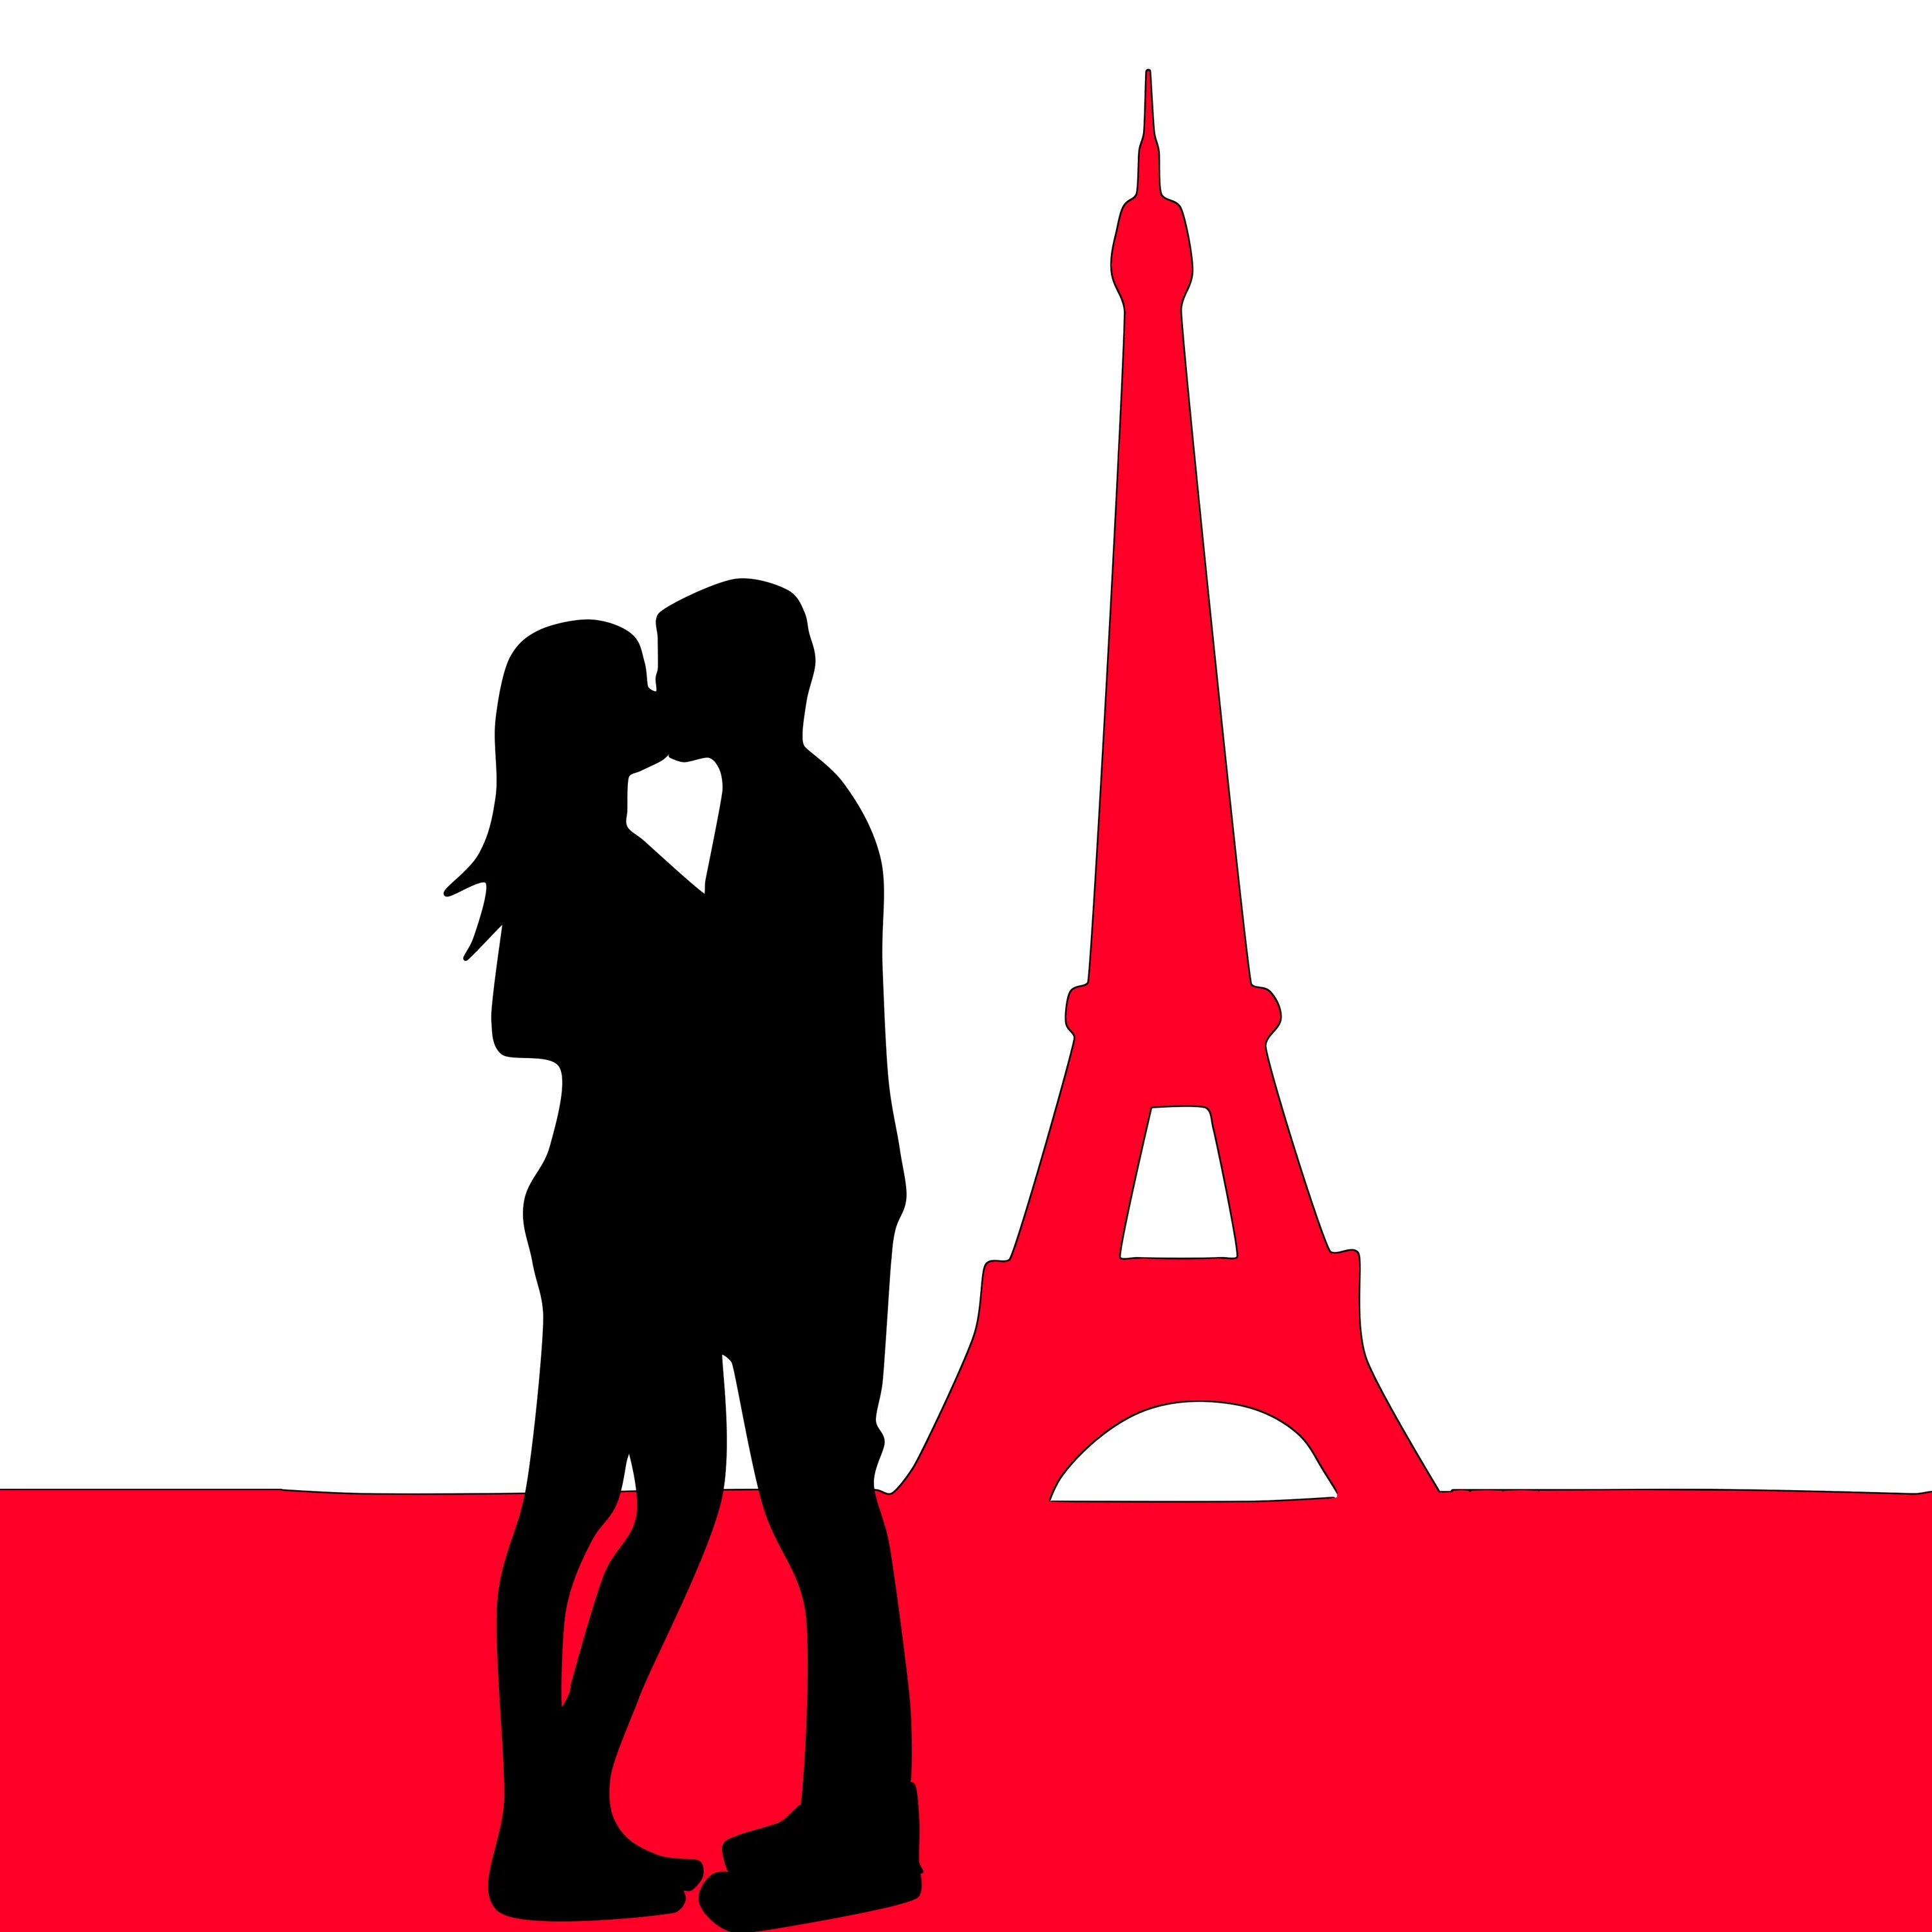 Франция любовь. Париж любовь. Любовь по французски. Париж иллюстрации Love. Как по французски будет я думаю